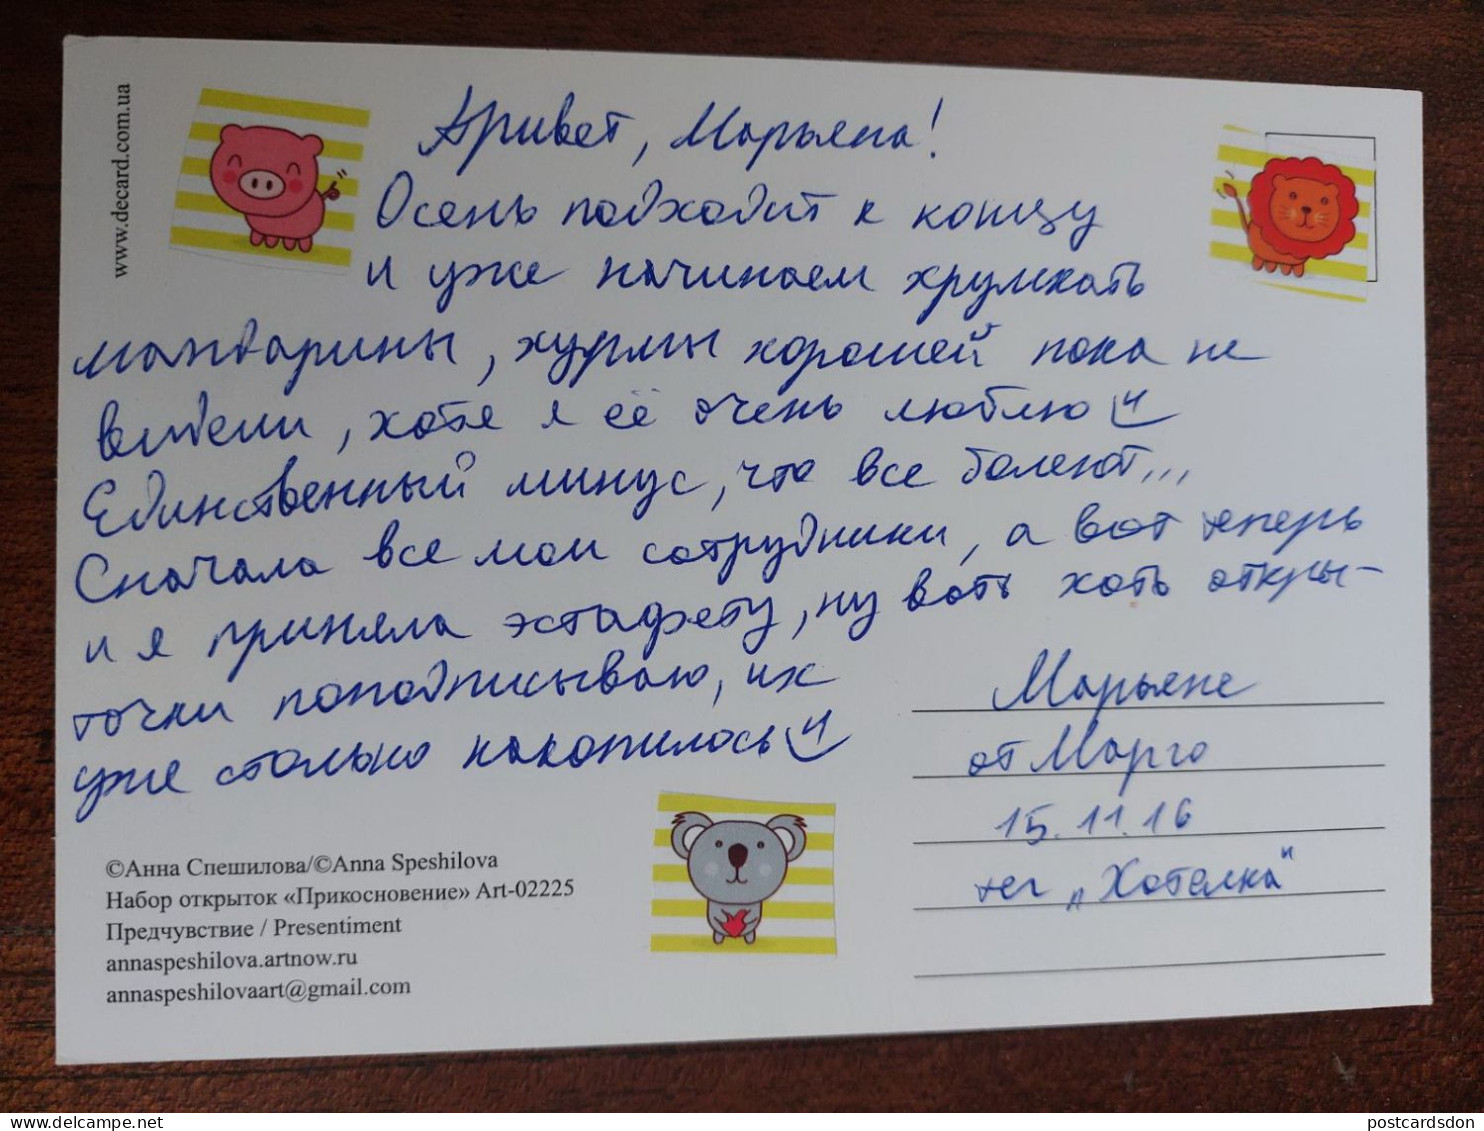 Illustrator Speshilova "Presentiment" - Modern Ukrainian Postcard - Postcrossing - 2010s / Seagull - Ucrania